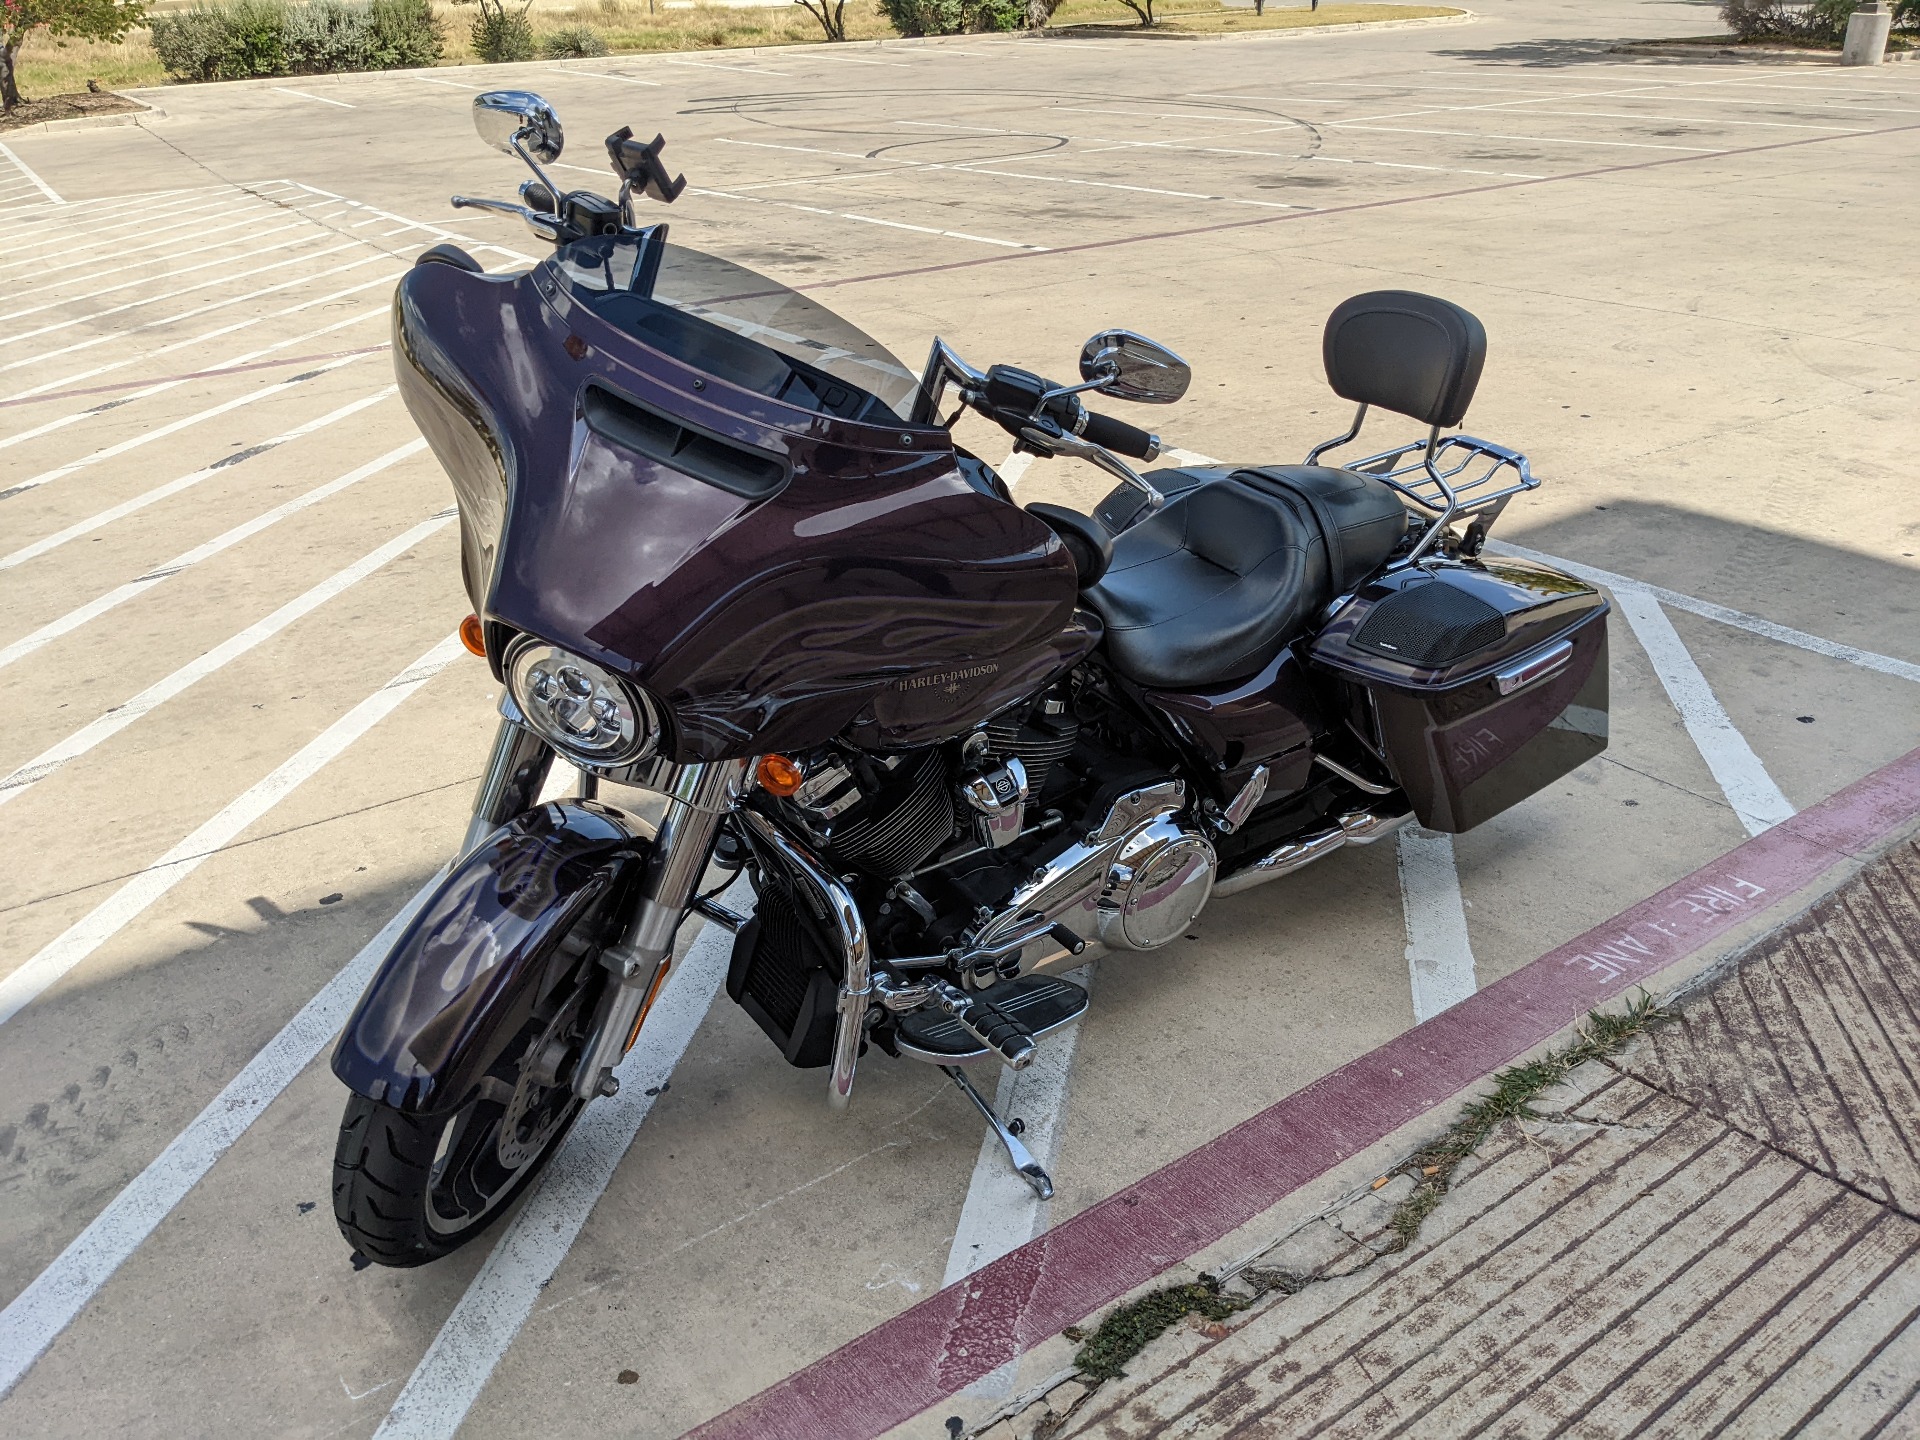 2017 Harley-Davidson Street Glide® Special in San Antonio, Texas - Photo 4